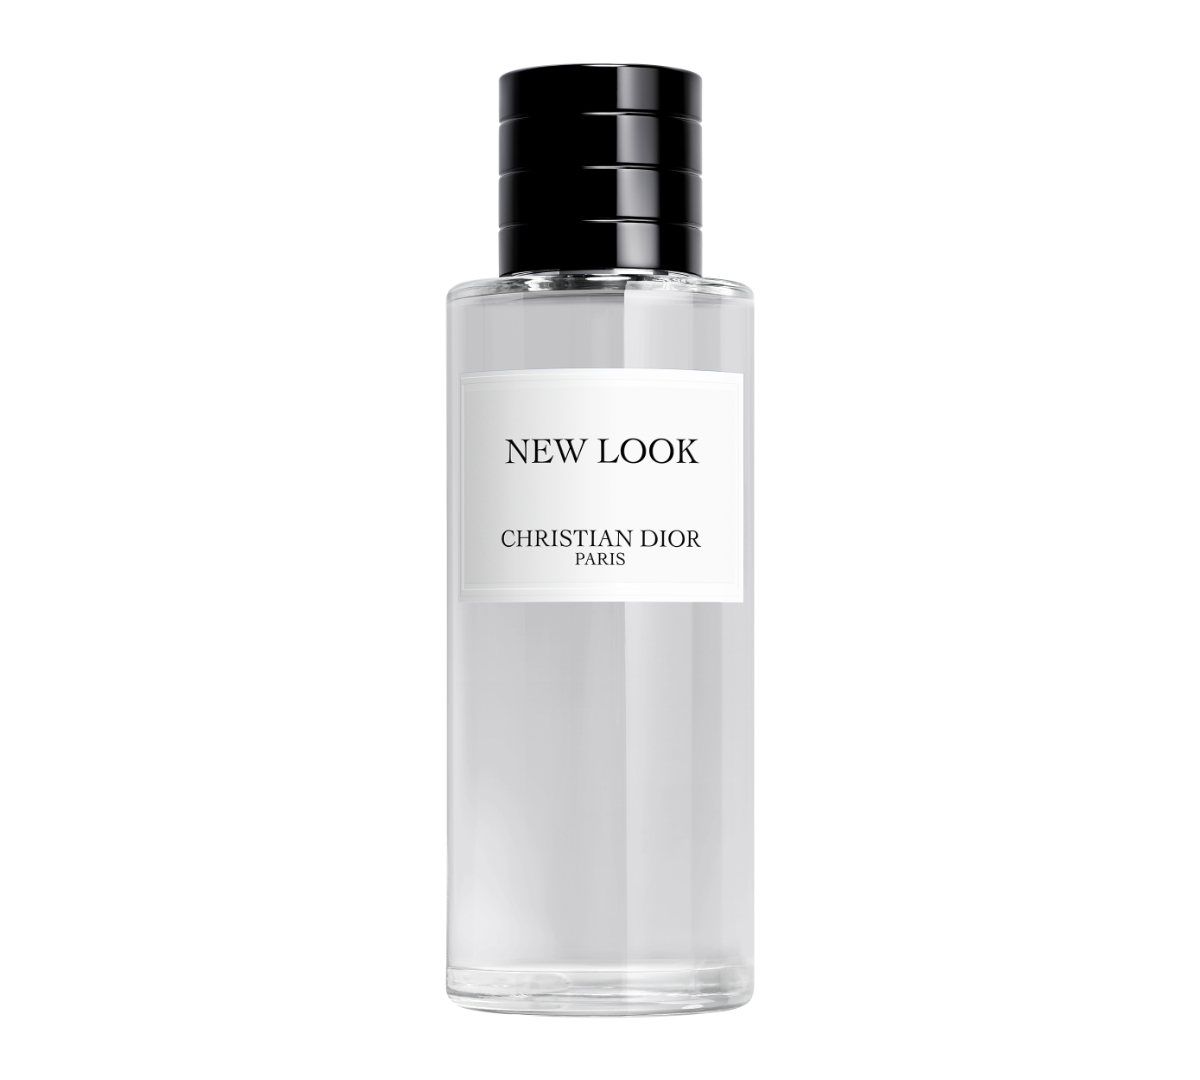 Perfume New Look, de Christian Dior